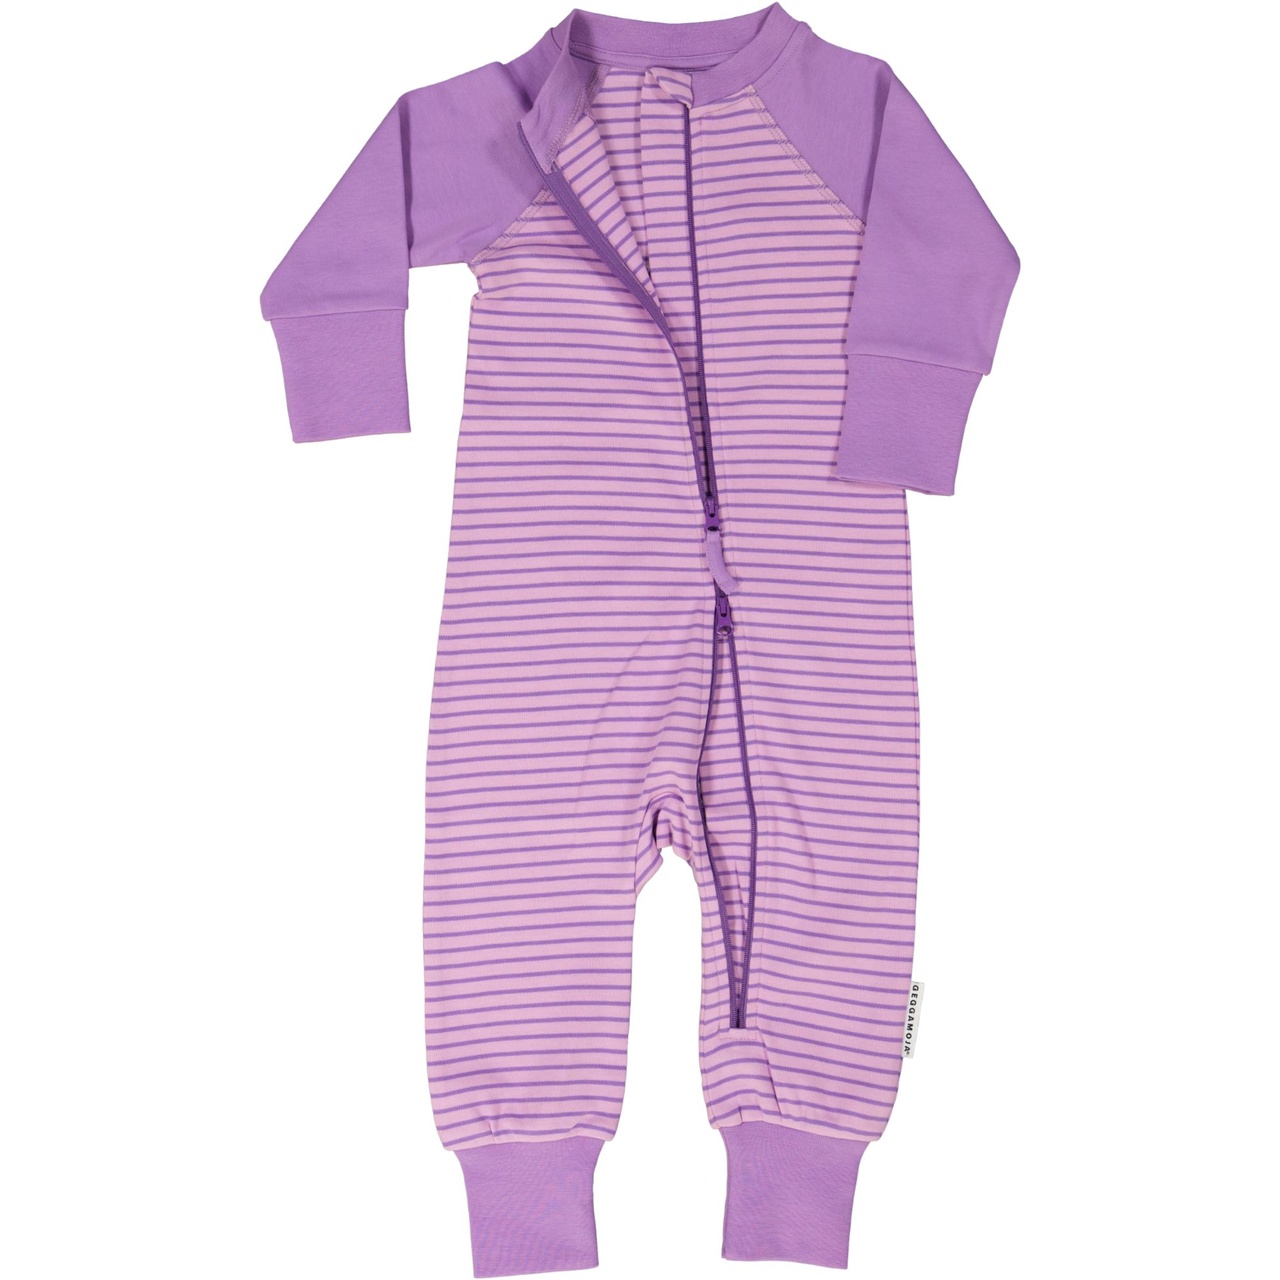 Pyjamas L.purple/purple 16